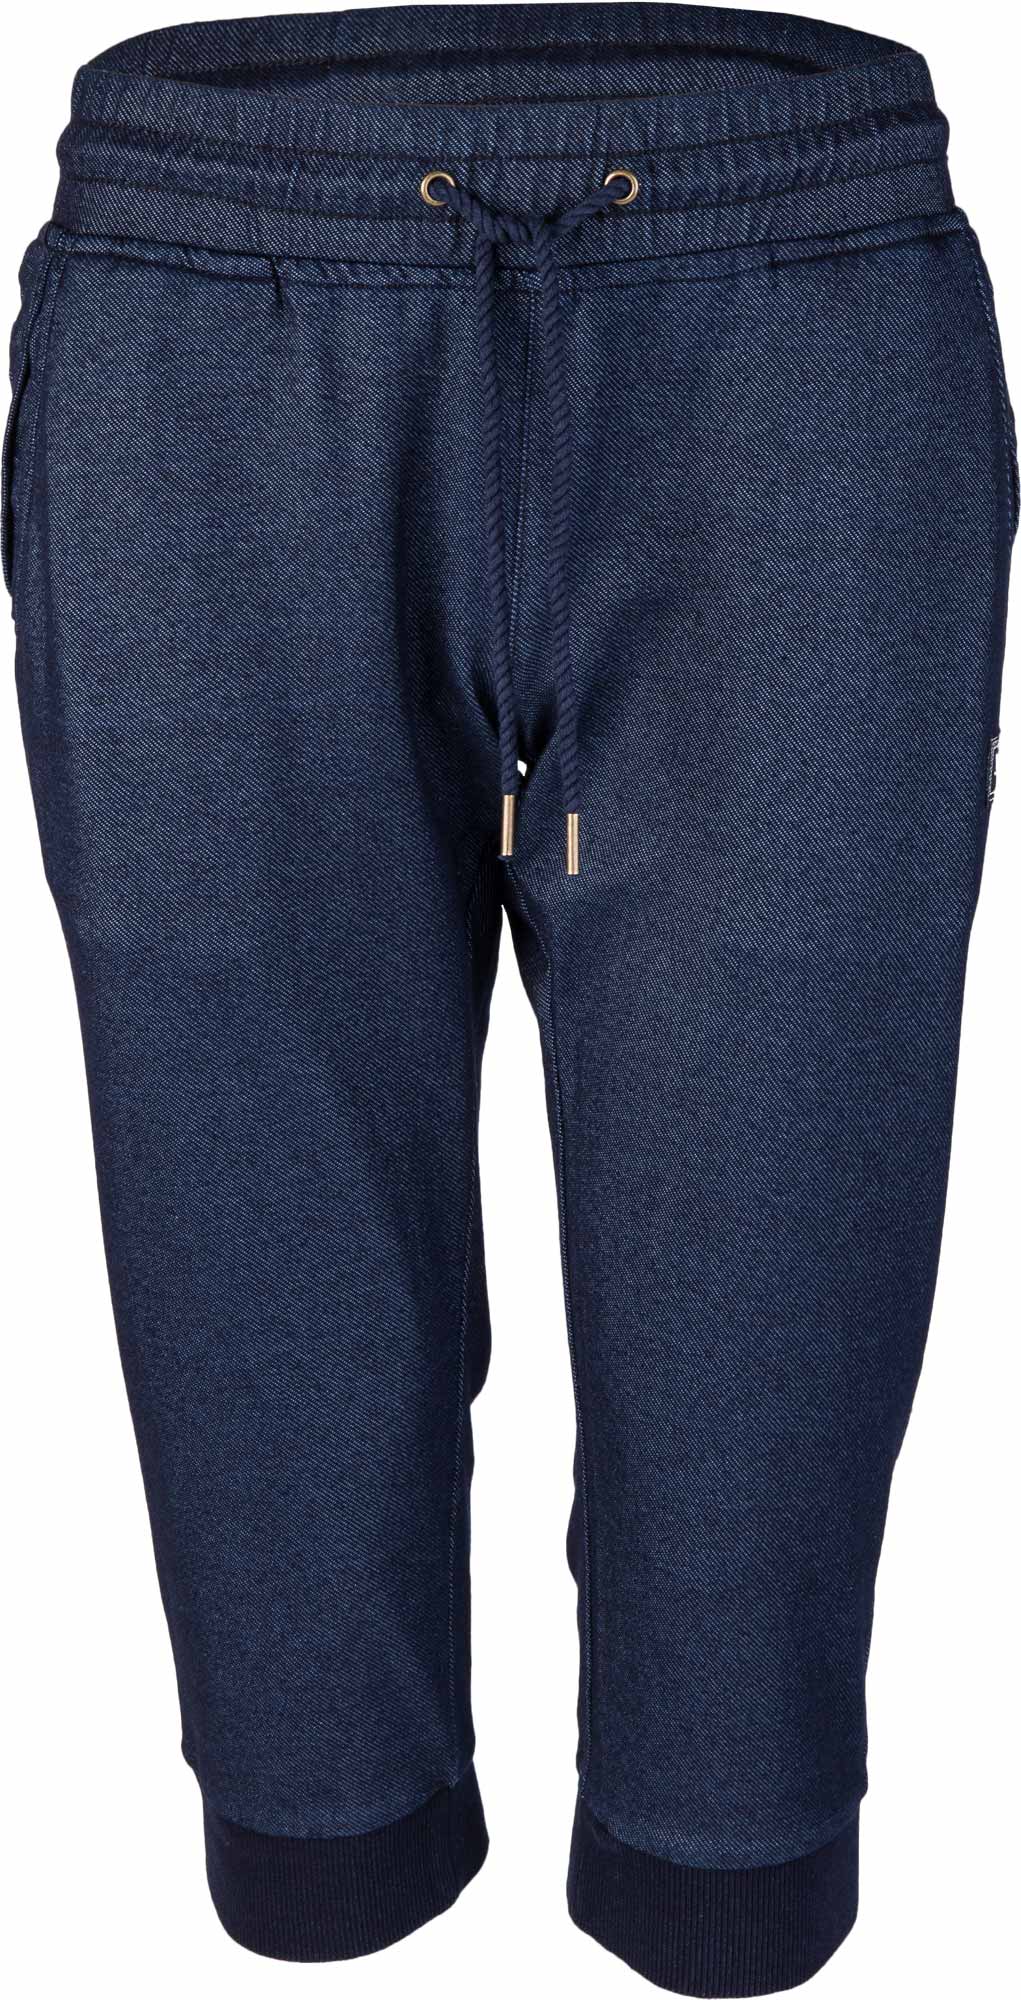 Women's 3/4 length pants